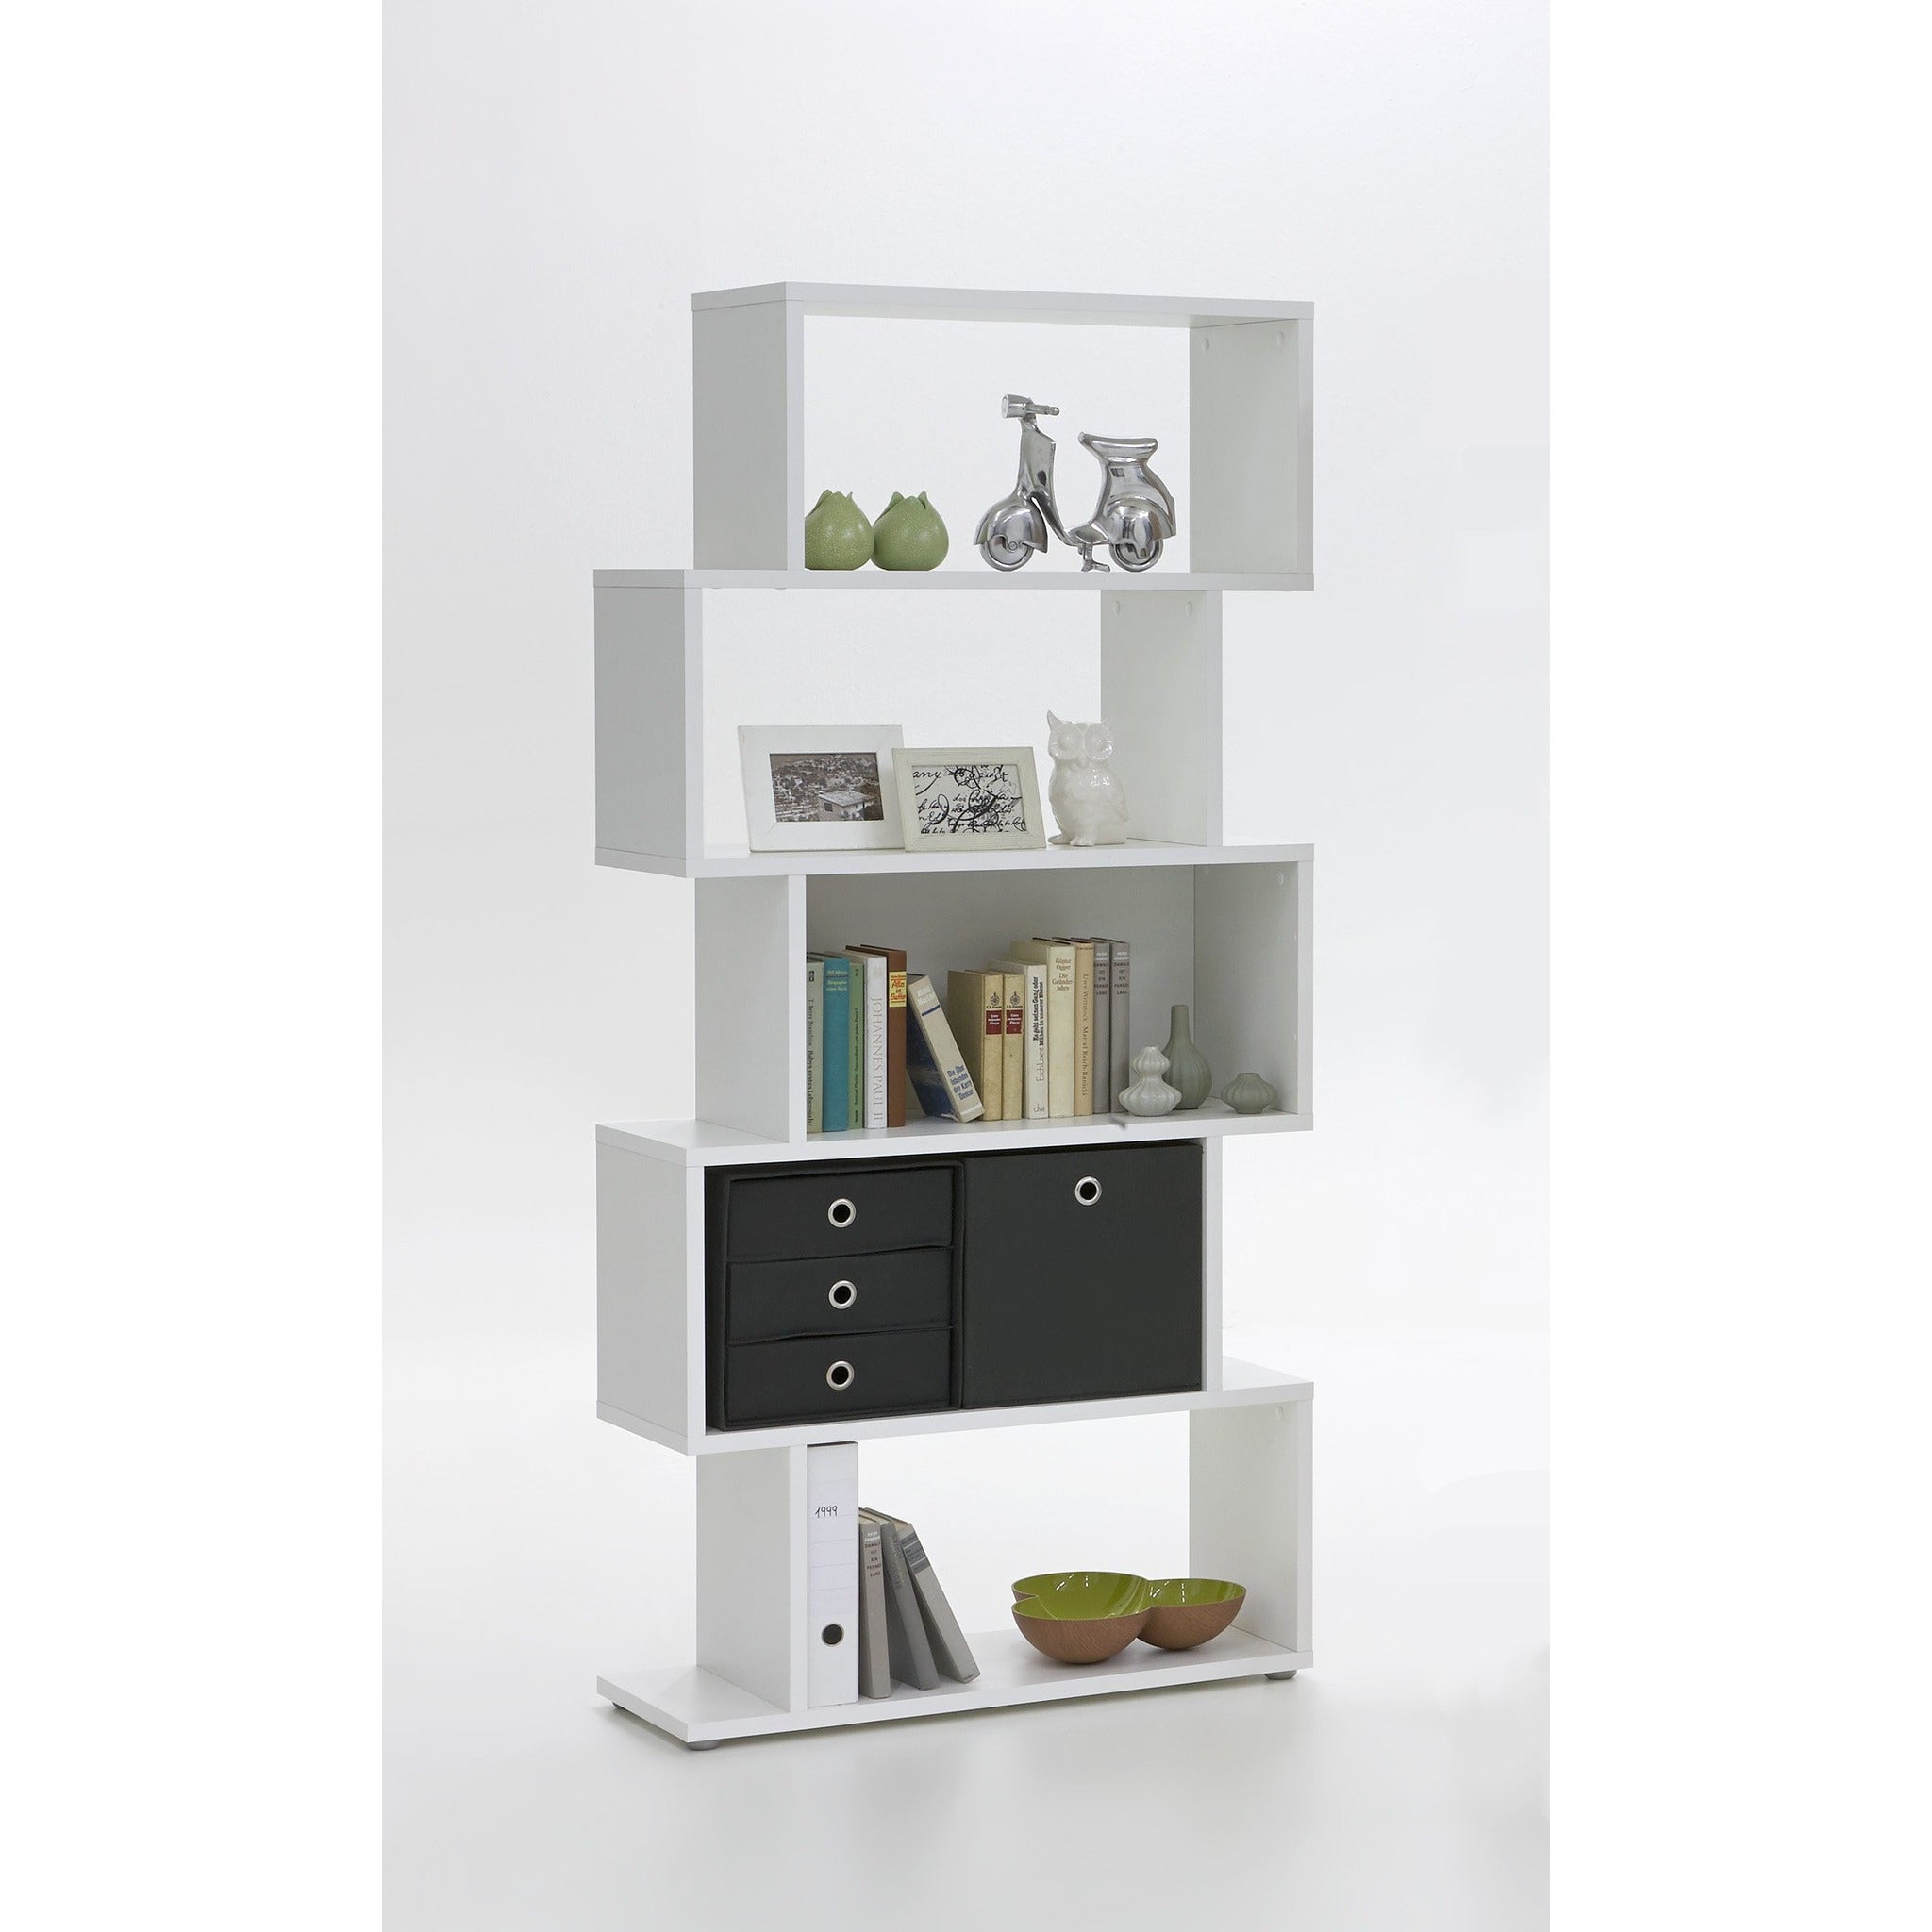 Mega Range Cubby Display Shelving Bookcase Freedom Homestore